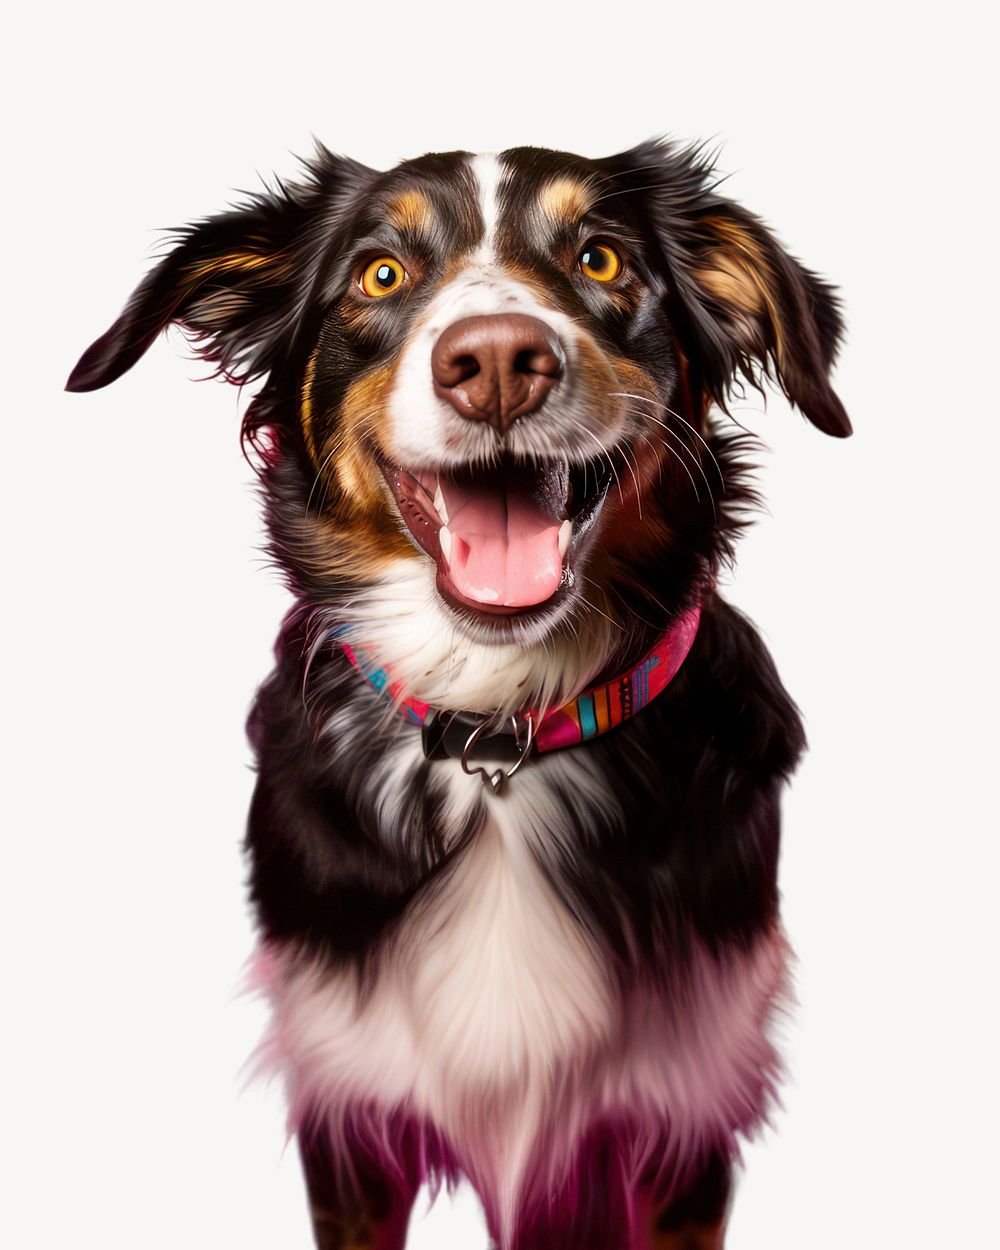 Mammal animal pet dog. AI generated Image by rawpixel.